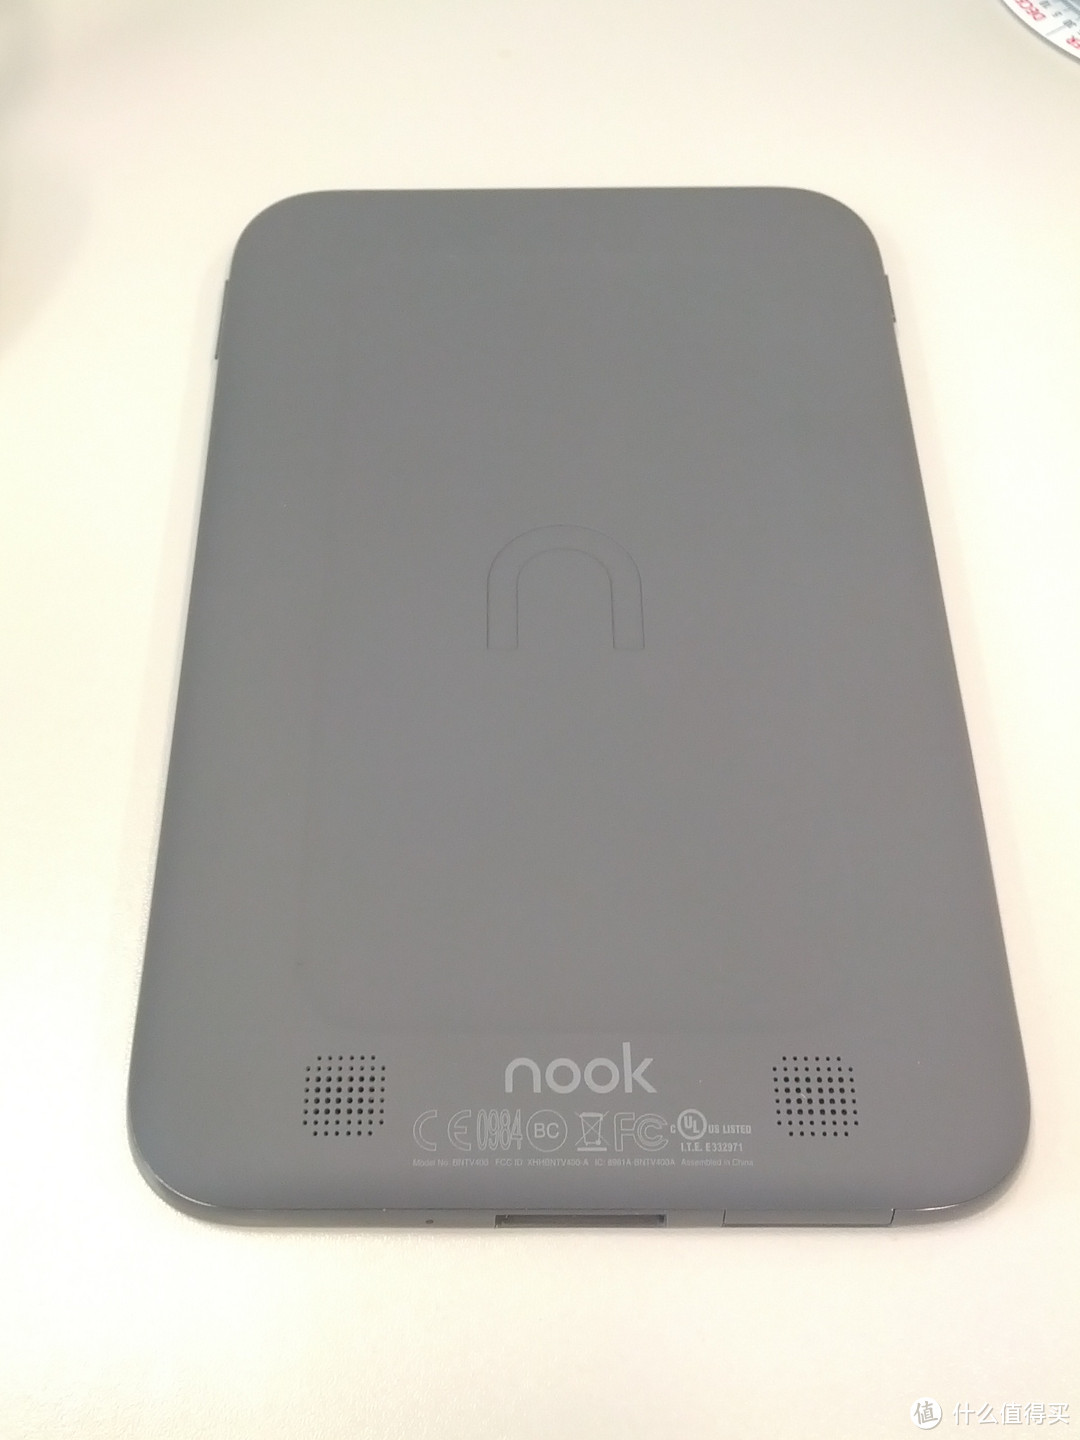 B&N 巴诺书店 NOOK HD 7寸 平板电脑 新鲜晒单